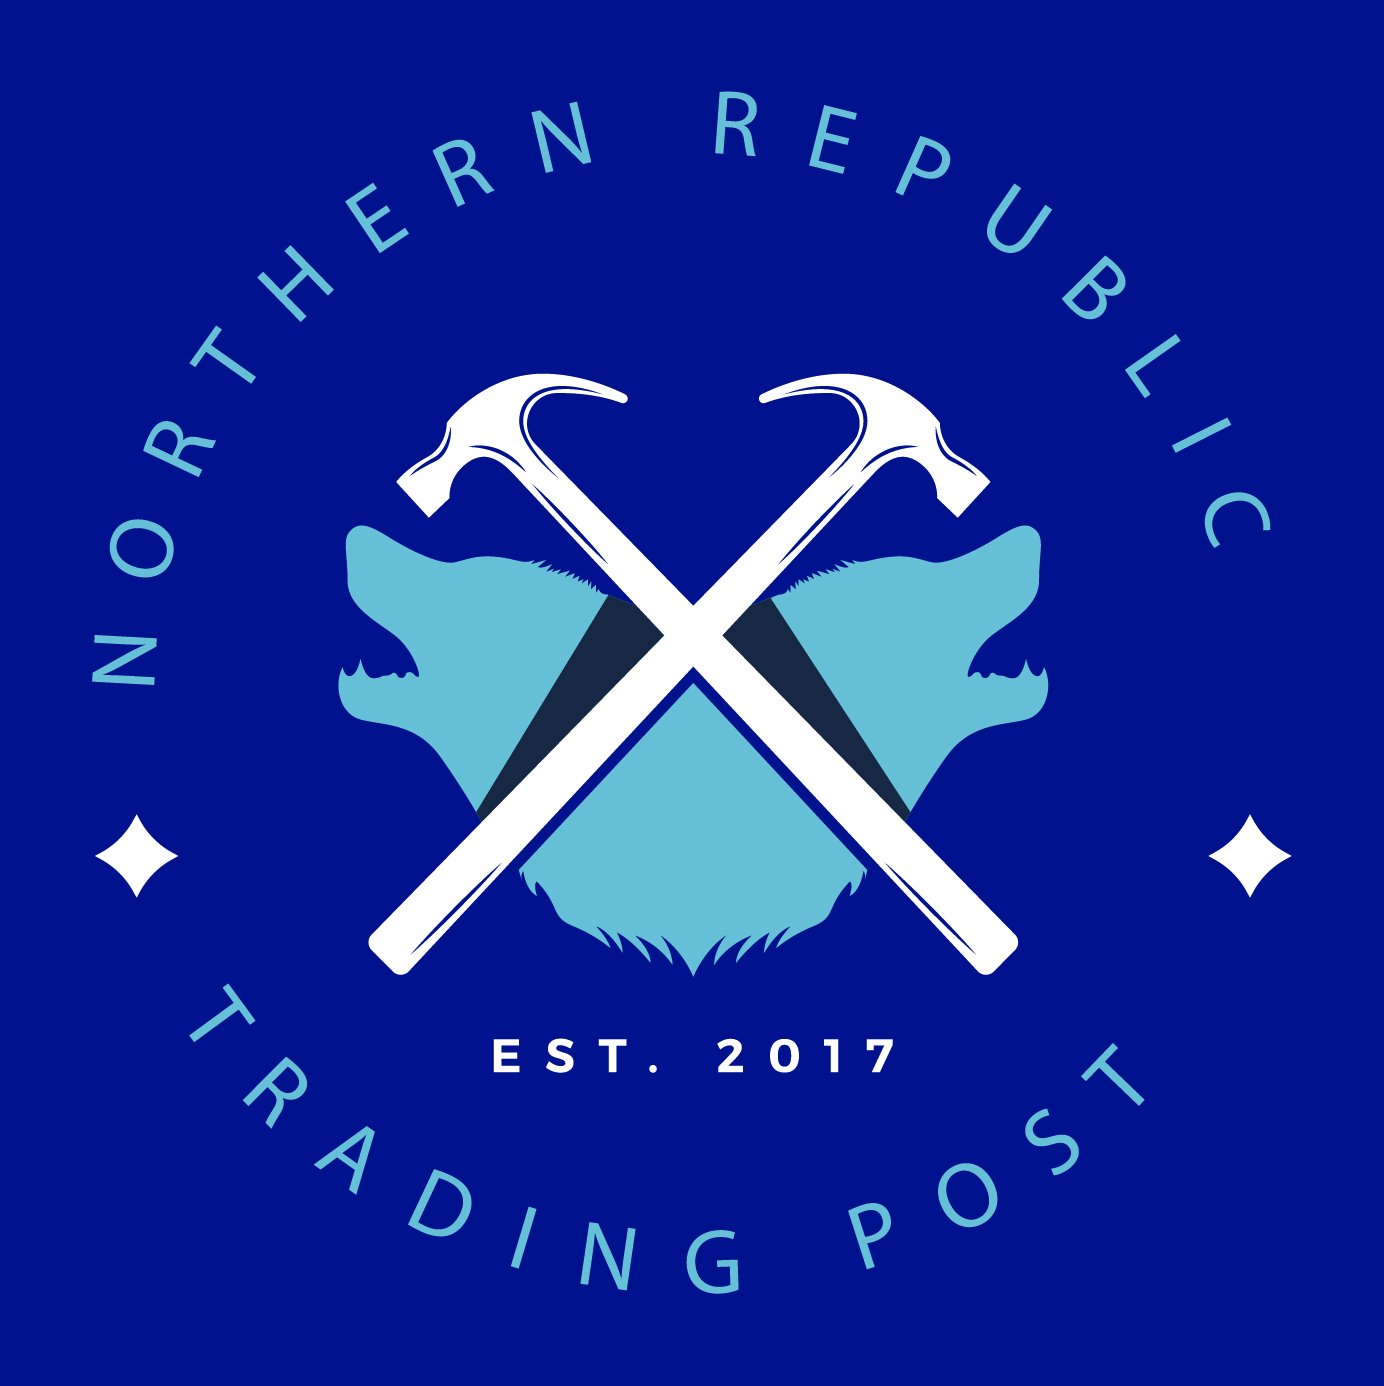 northernrepublic.net